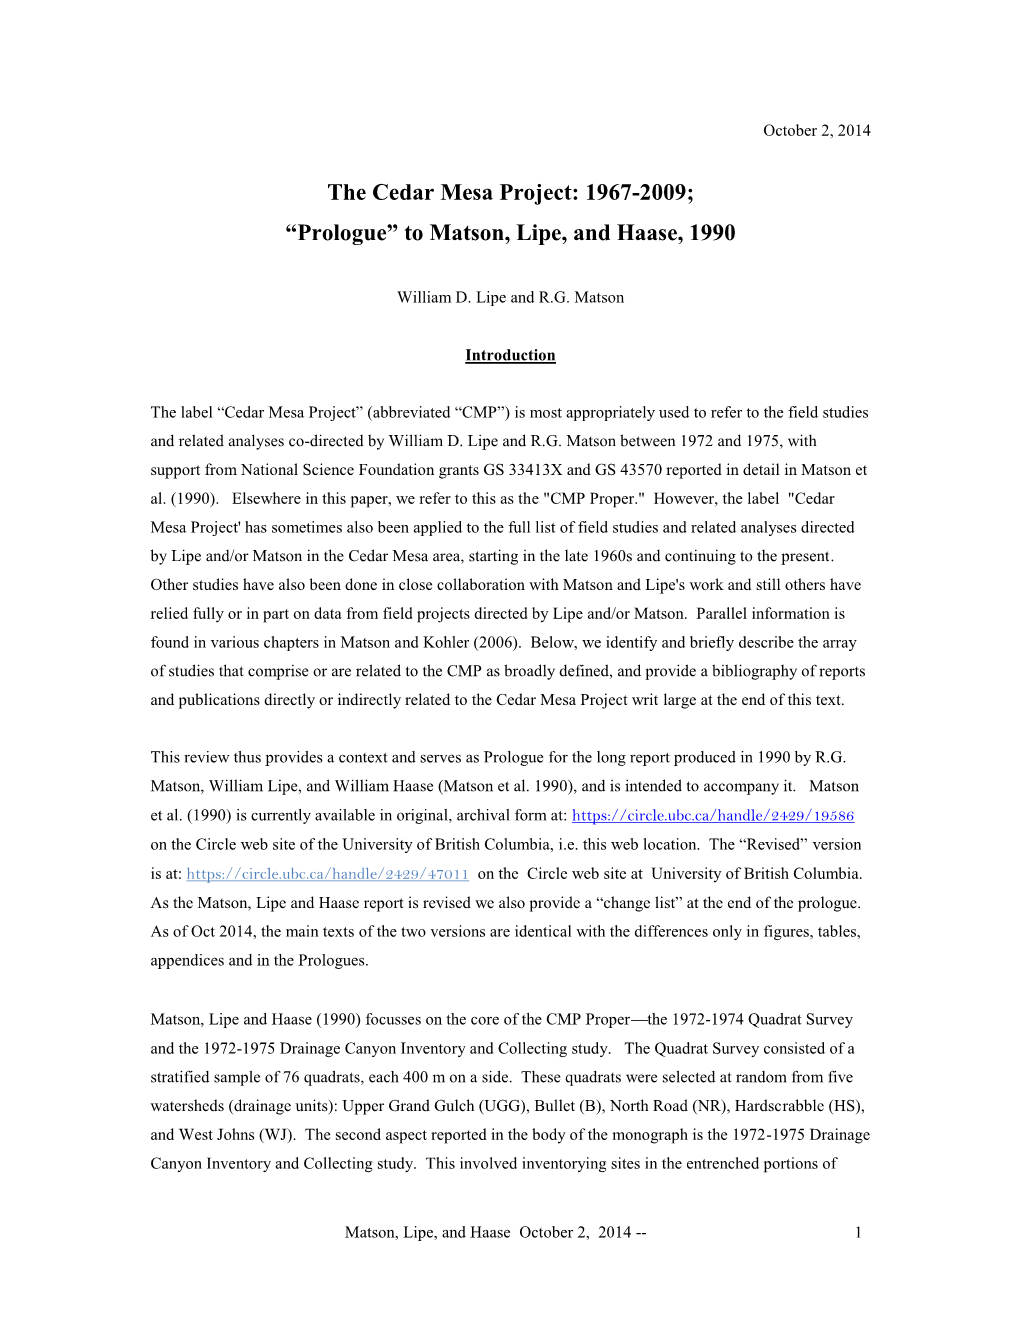 The Cedar Mesa Project: 1967-2009;